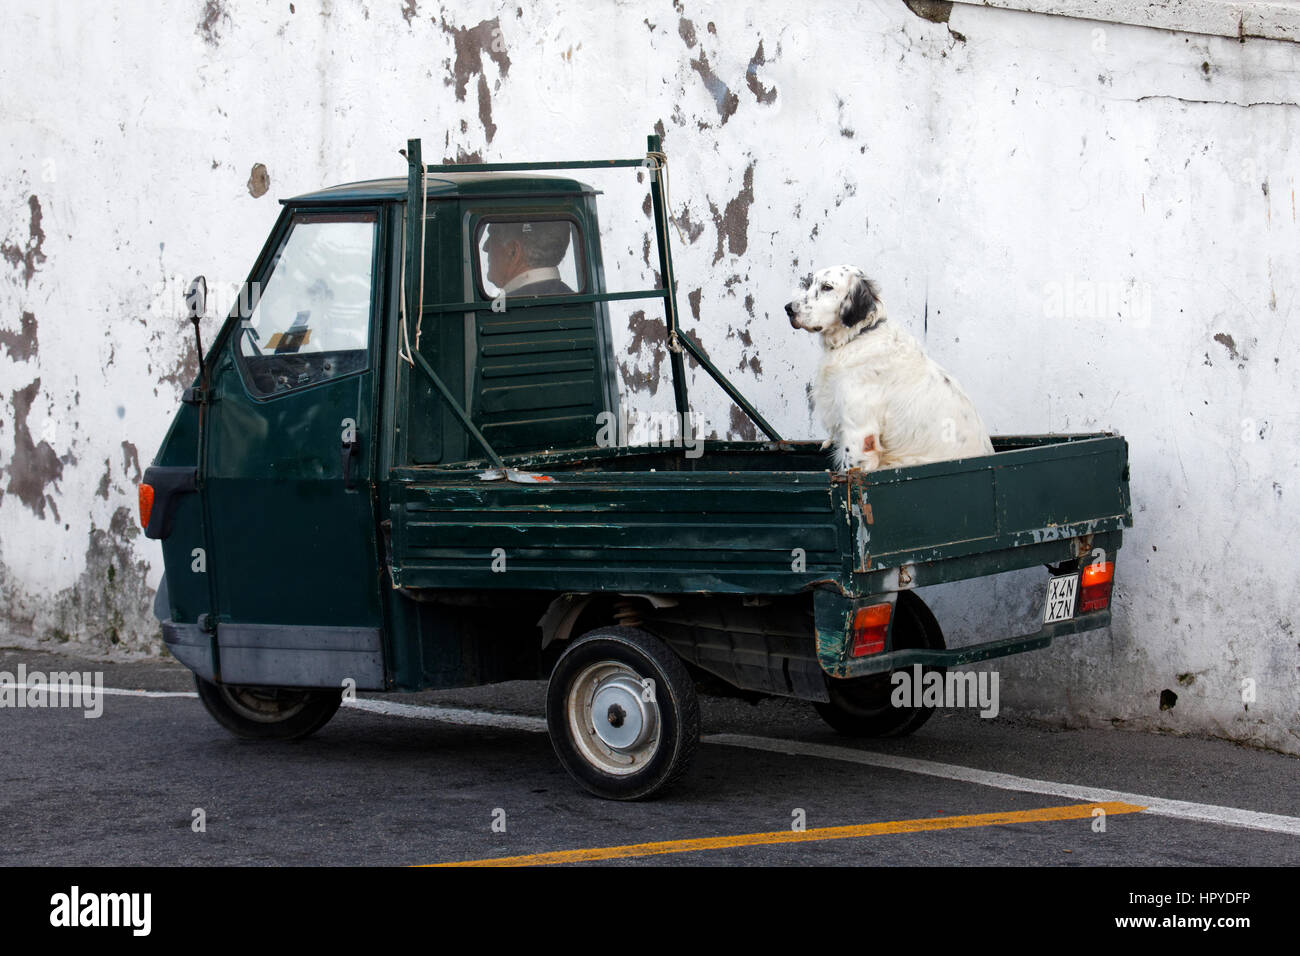 Ape motor vehicle with dog in the back, Capri, Campania, Italy, Europe Stock Photo